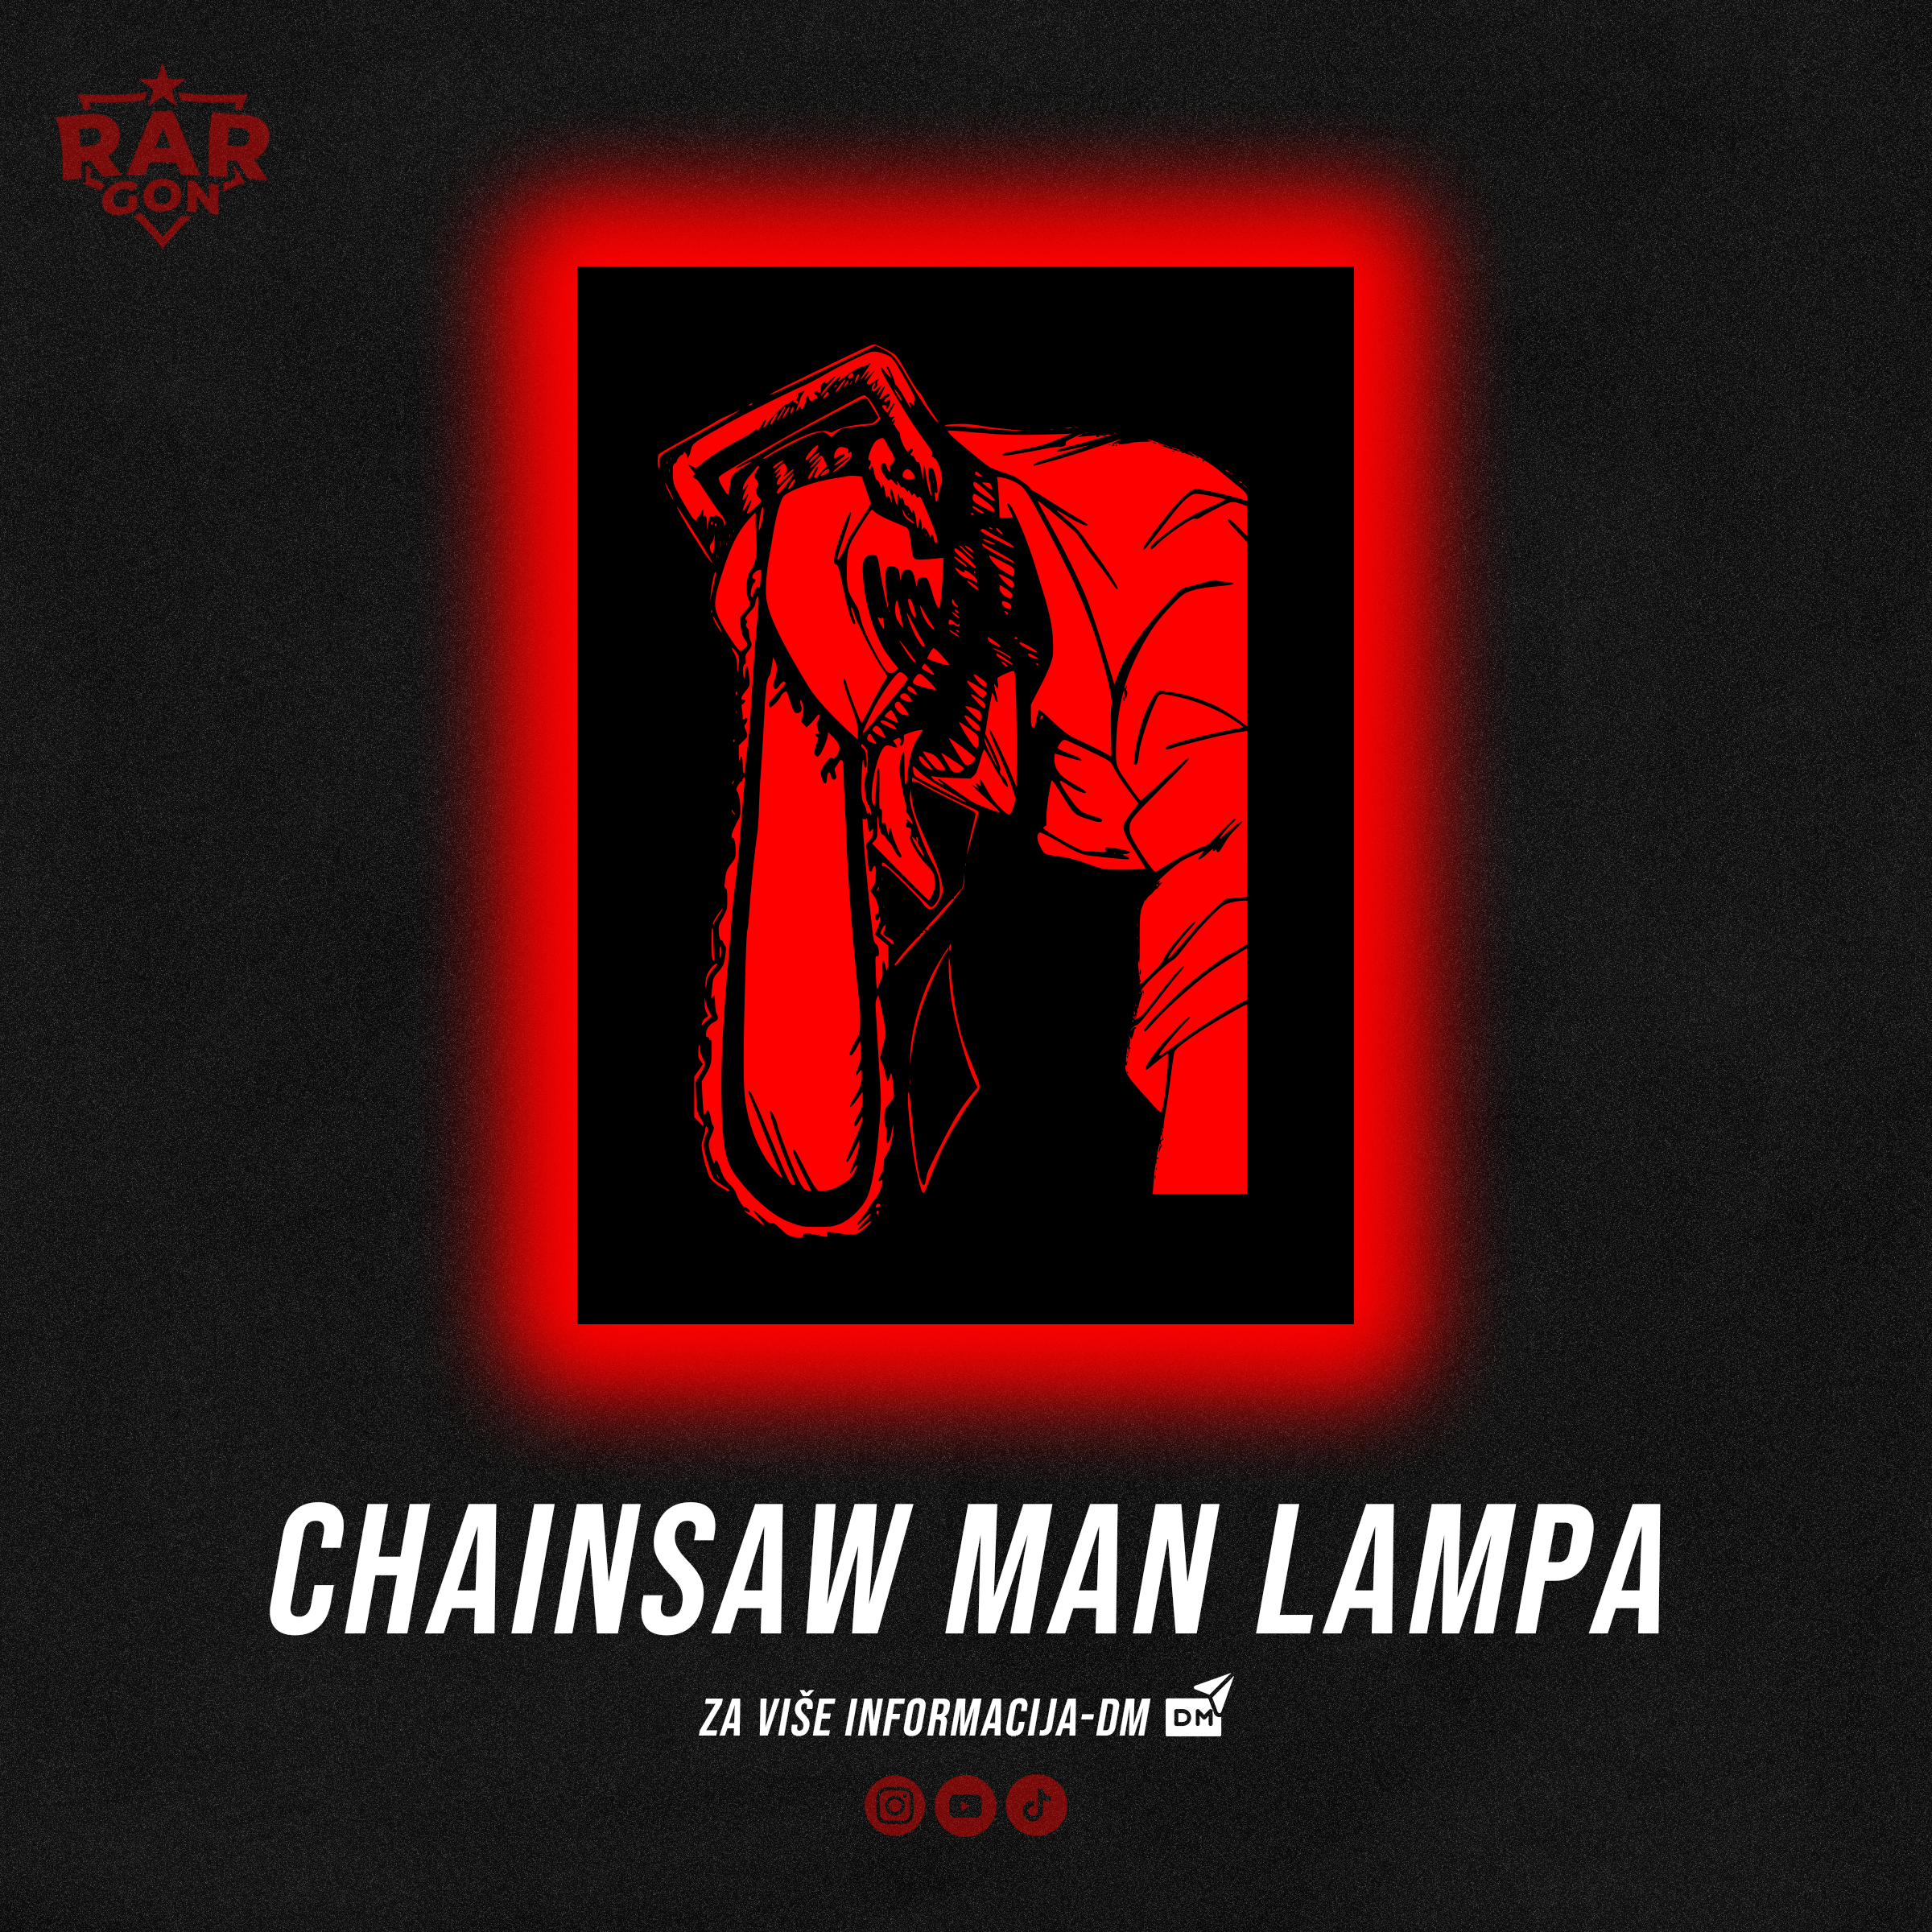 CHAINSAW MAN LAMPA